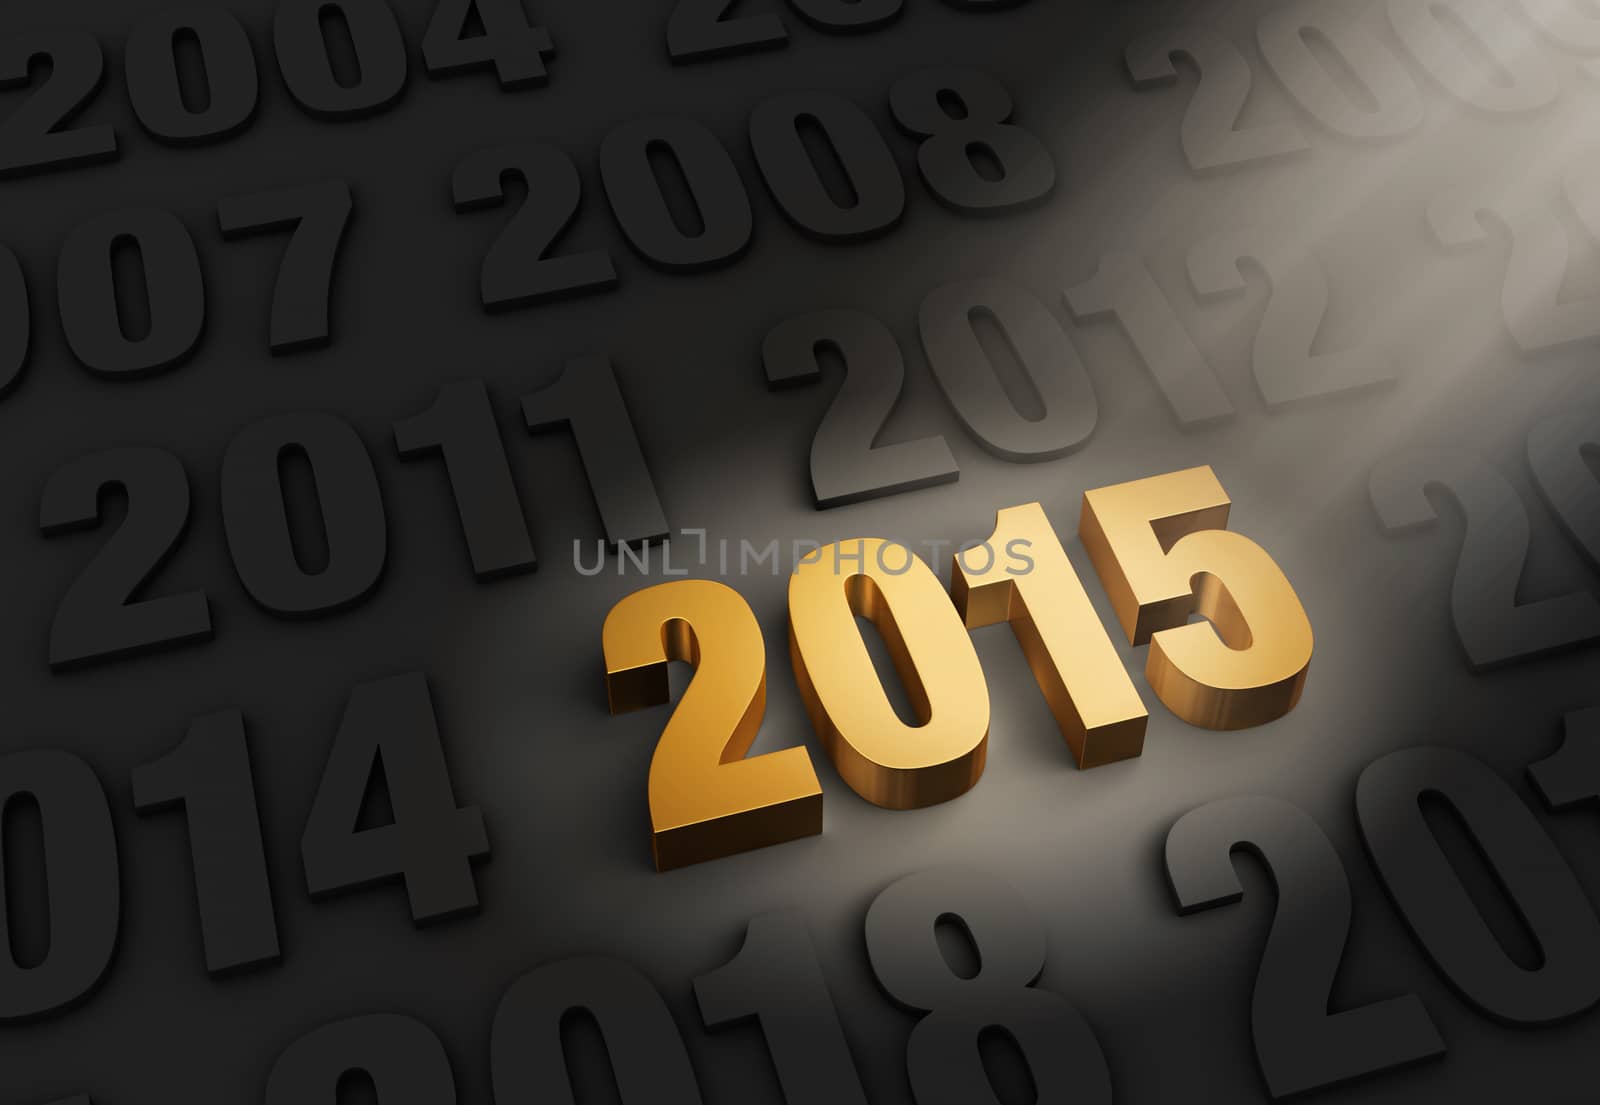 A spotlight illuminates a bright, gold "2015" on a dark background of preceding years.